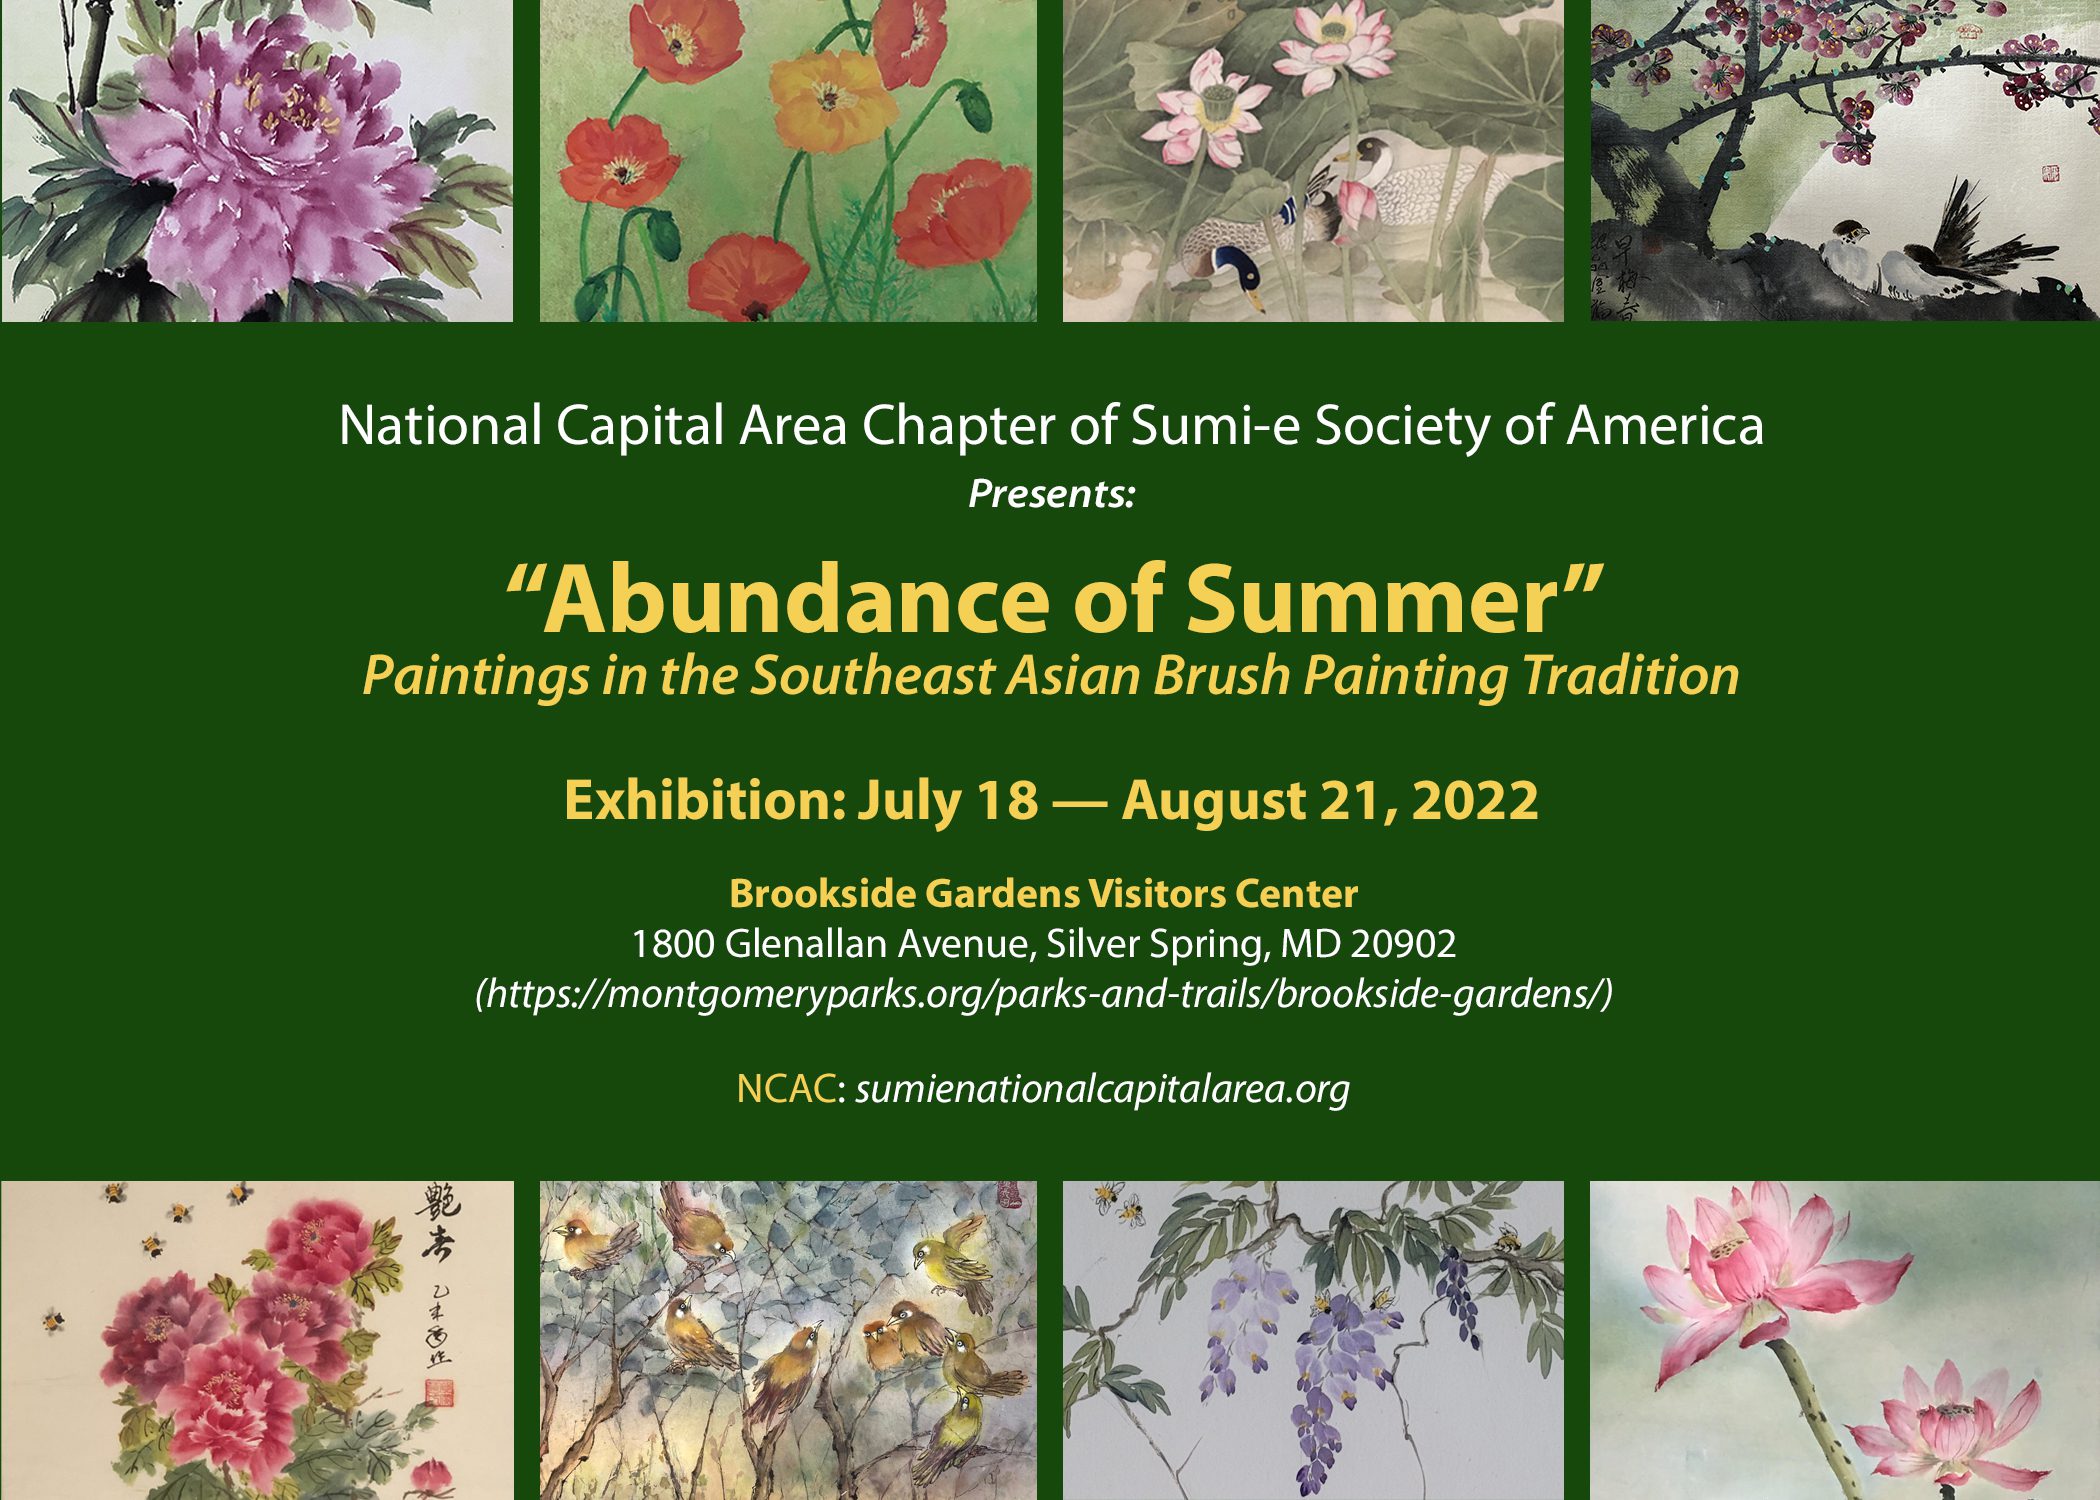 Abundance of Summer" Exhibition at Brookside Gardens